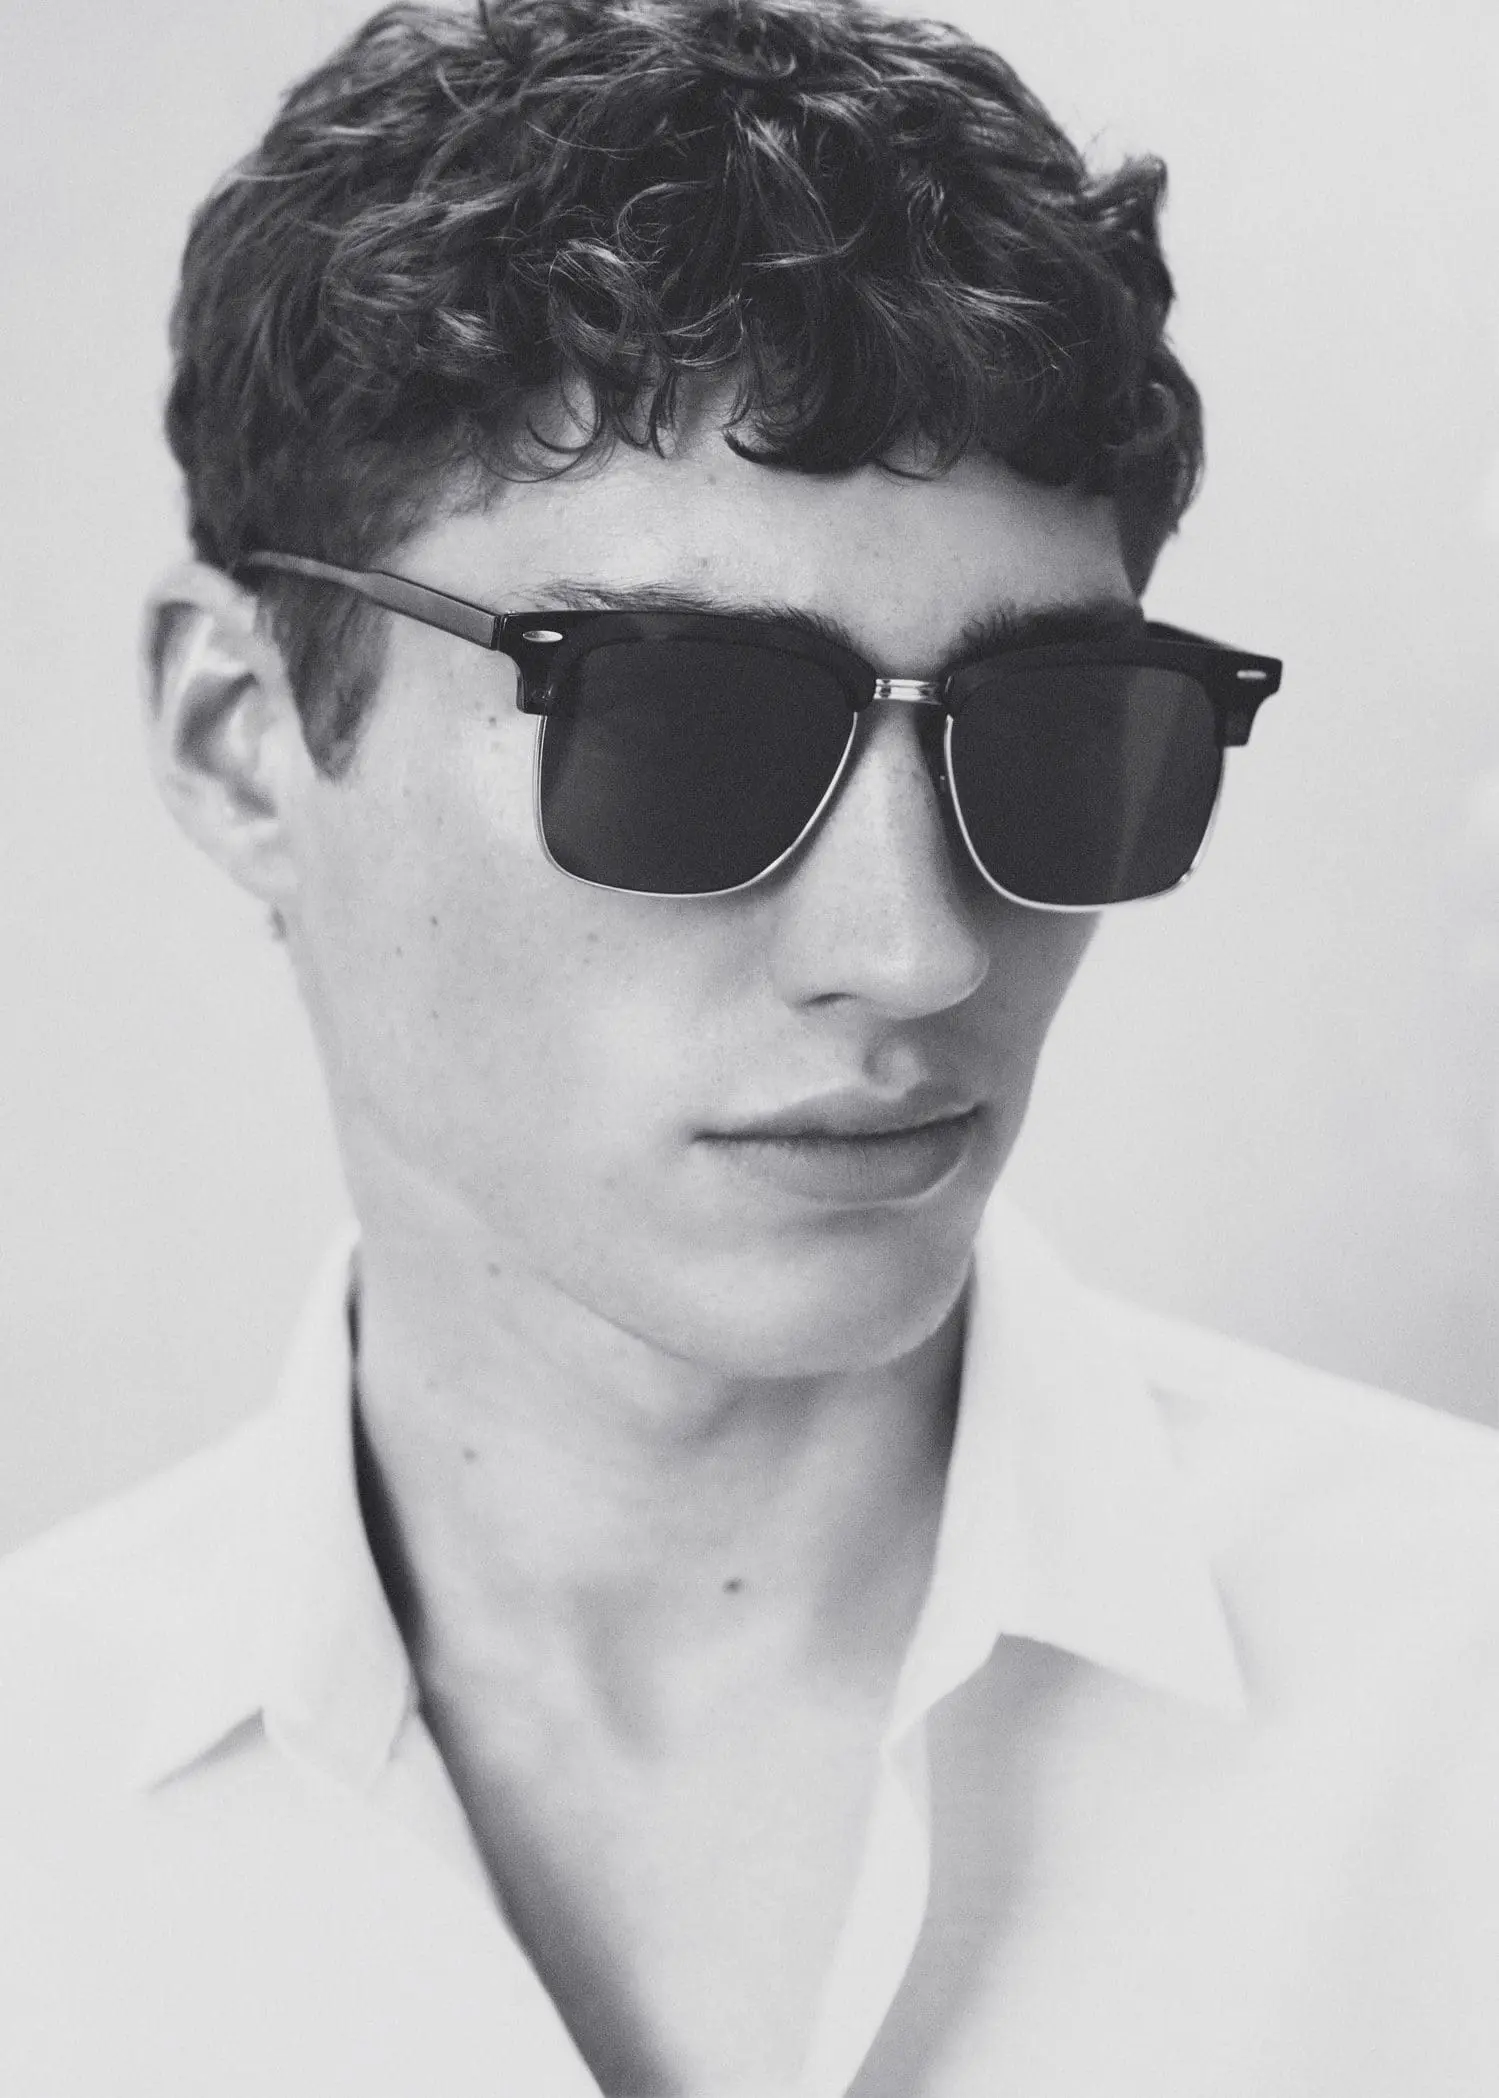 Mango Polarised sunglasses. a young man wearing a white shirt and sunglasses. 